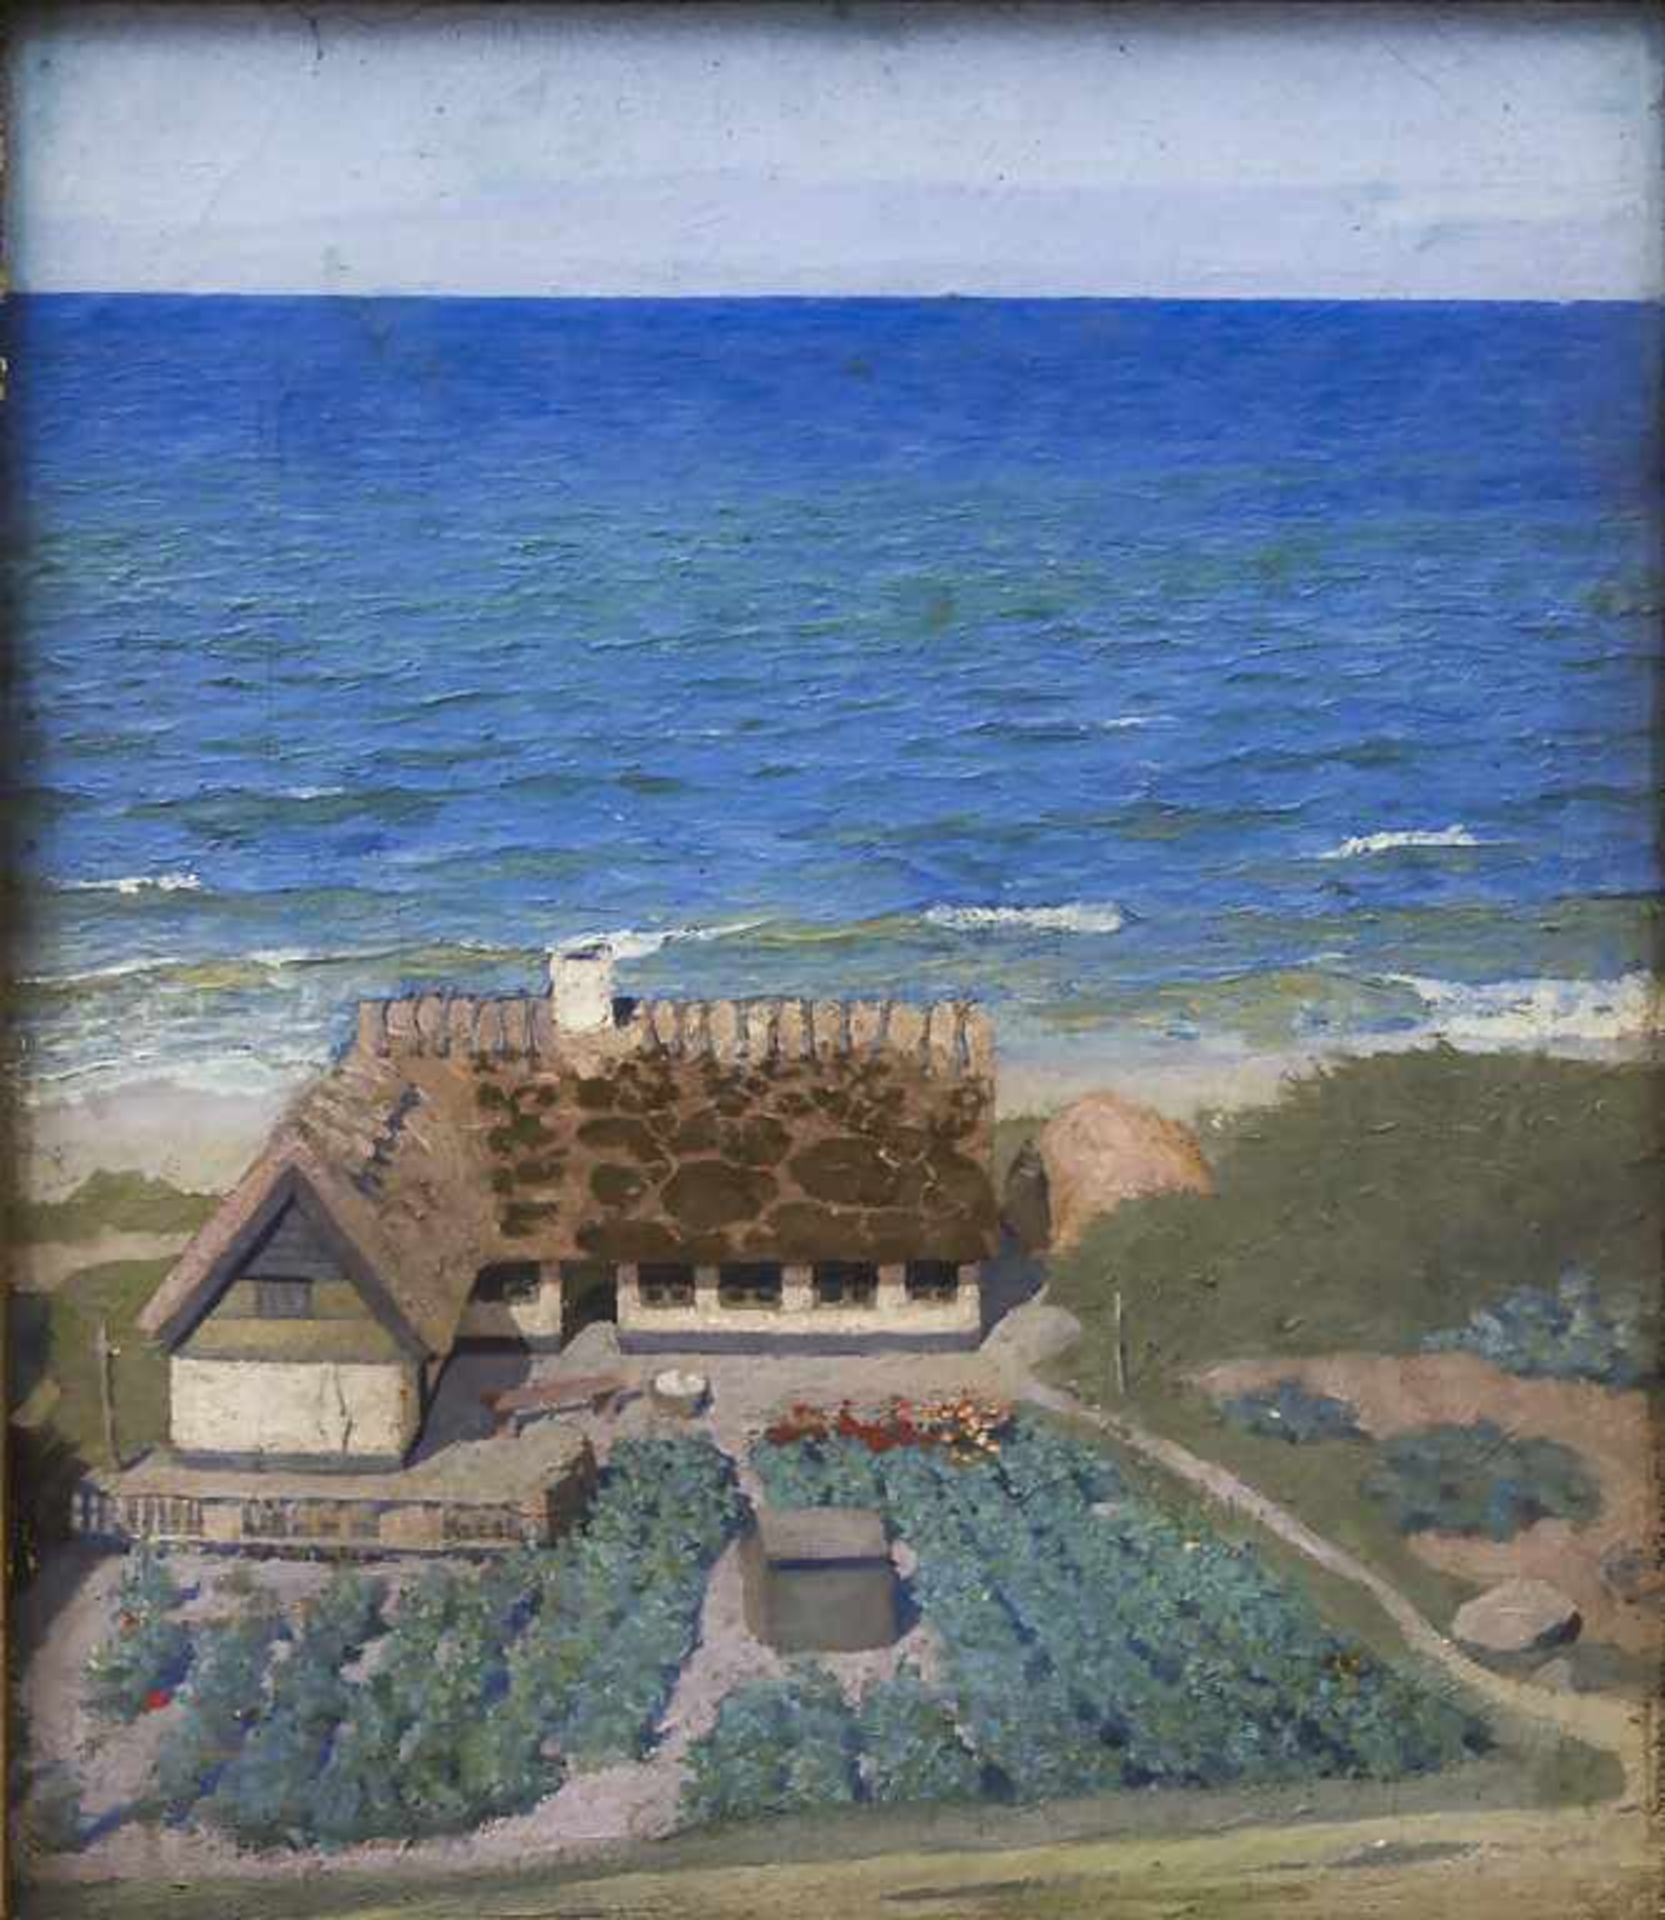 Dänischer Künstler (19. Jh.), 'Küstenhaus' / 'A coastal house' Technik: Öl auf Leinwand, gerahmt,